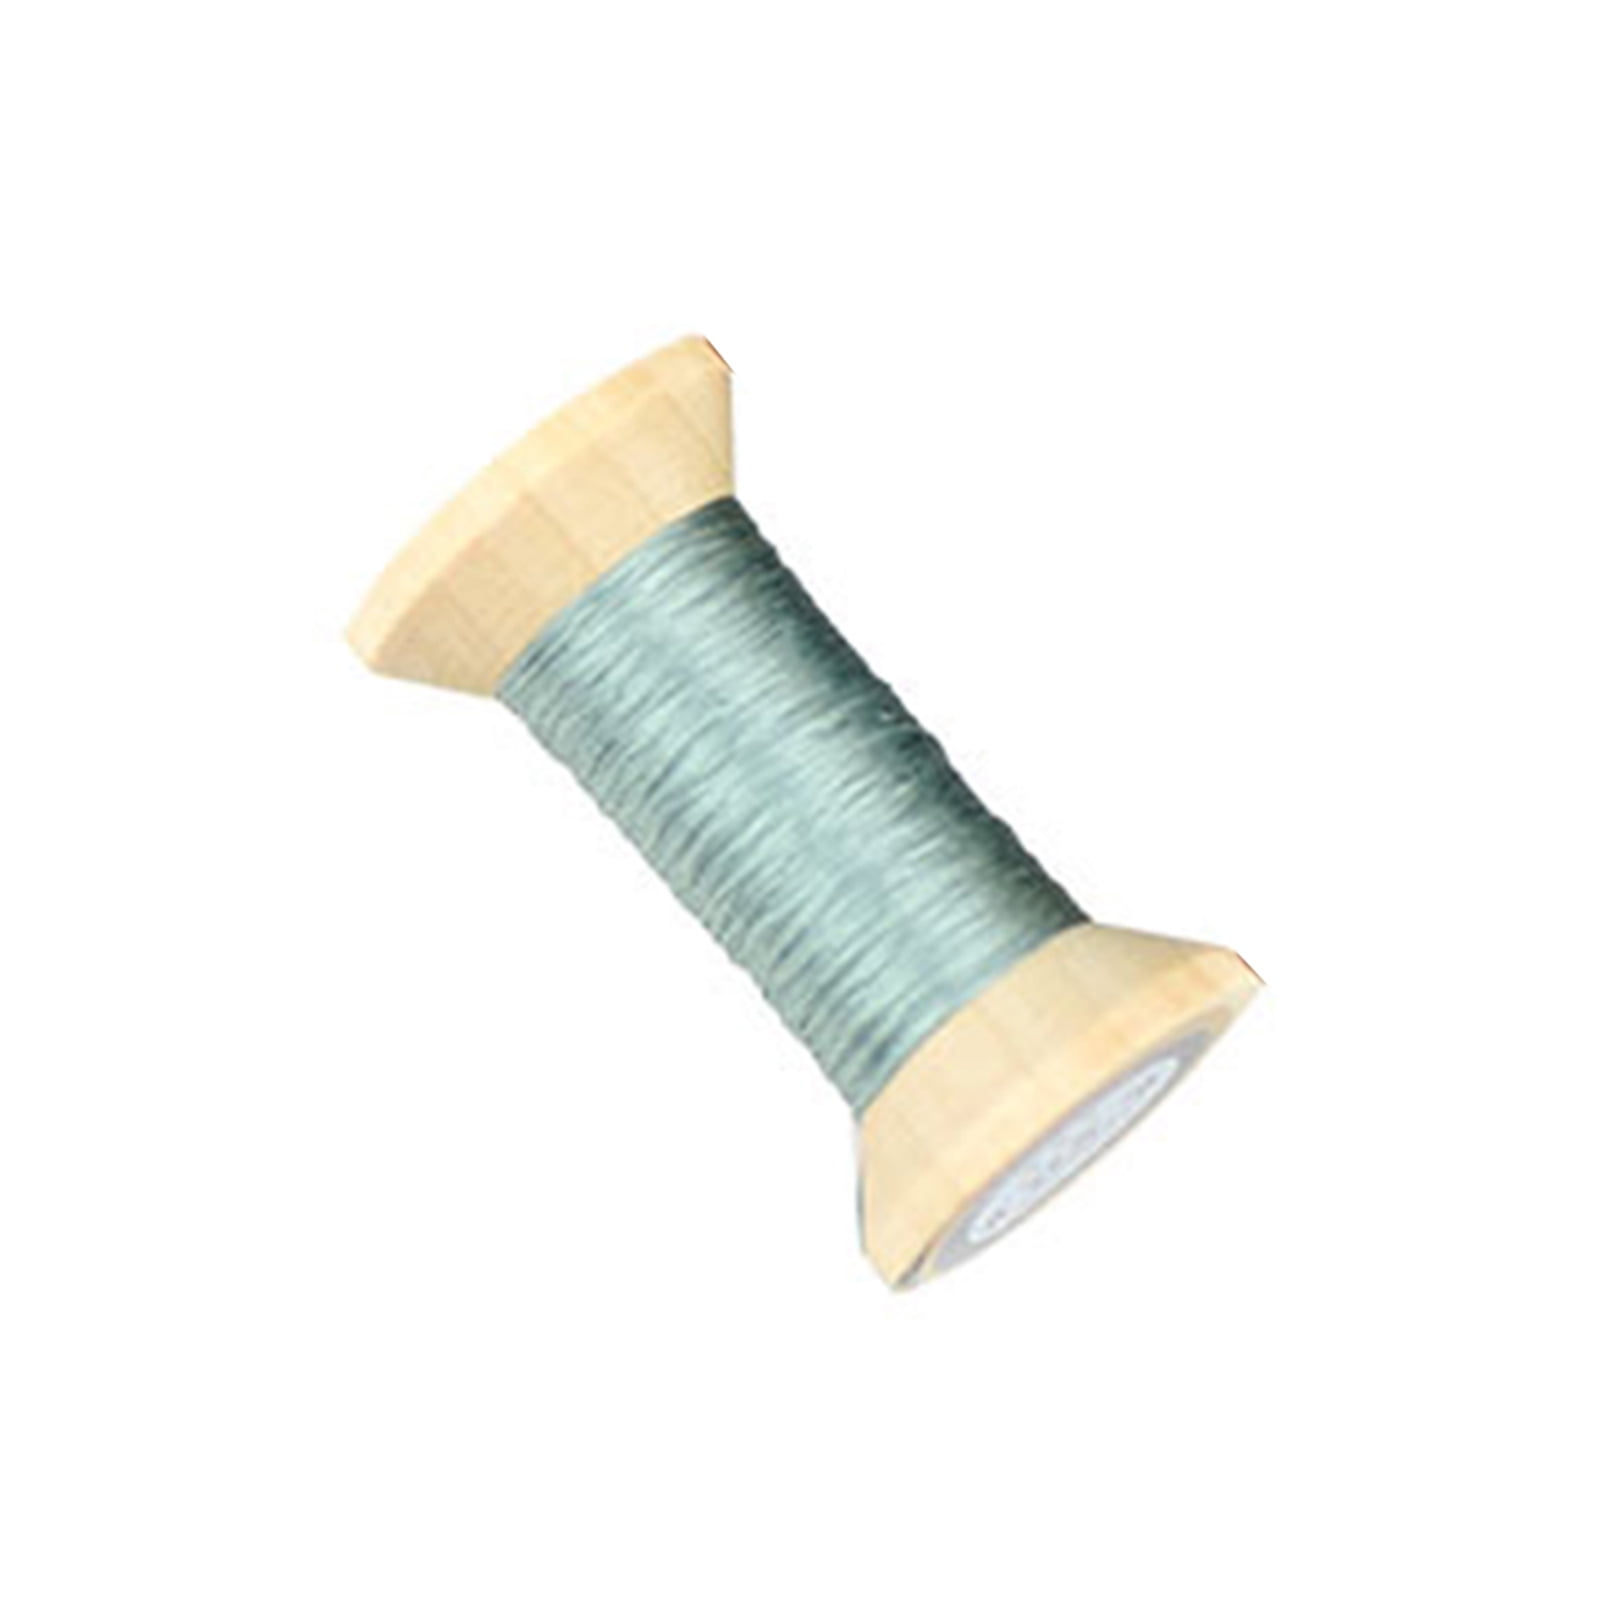 Aurifil Clear Invisible Nylon Thread 1094yd